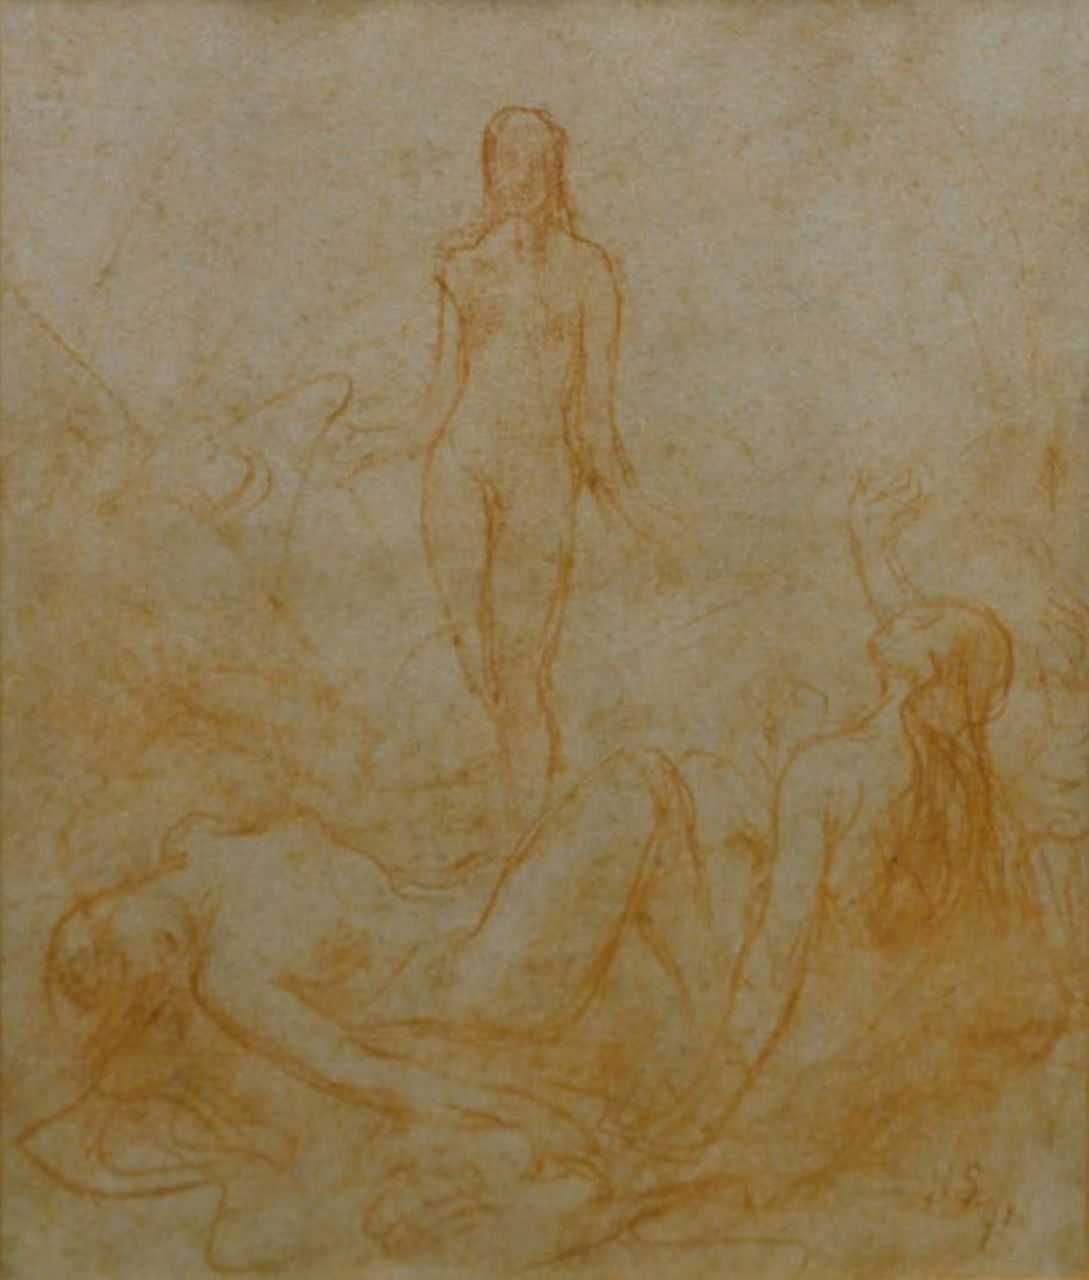 Smith H.  | Hobbe Smith, Drie nimfen, chalk on paper 25.5 x 22.5 cm, gesigneerd rechtsonder mon and gedateerd '41